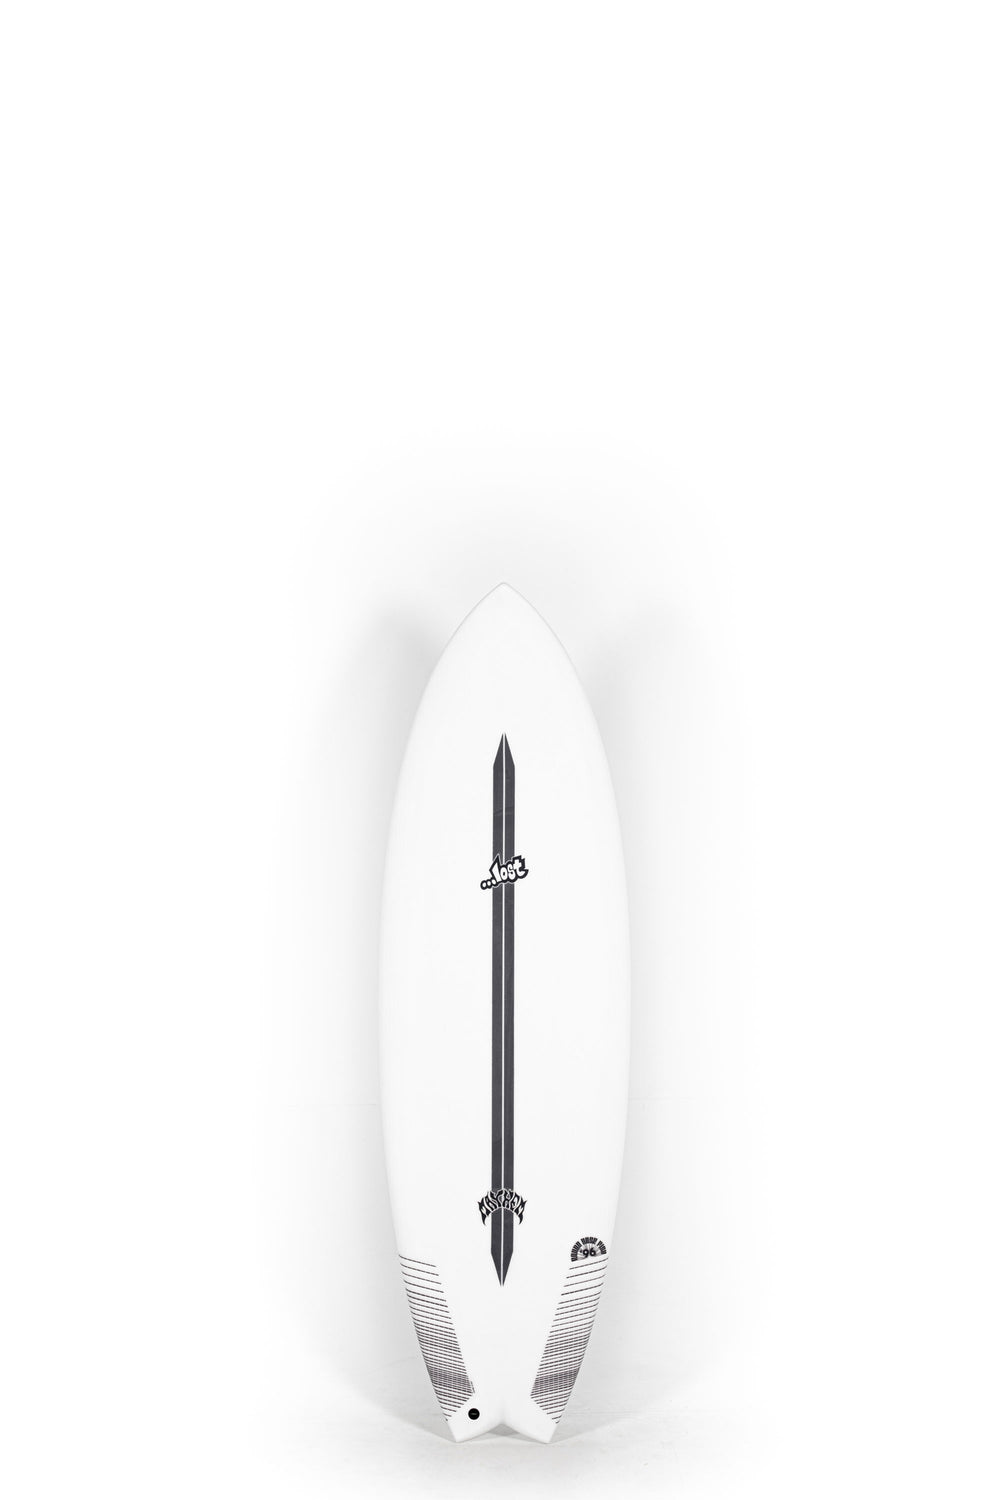 Lost Surfboard - ROUND NOSE FISH - RNF '96 - Light Speed - 5'5